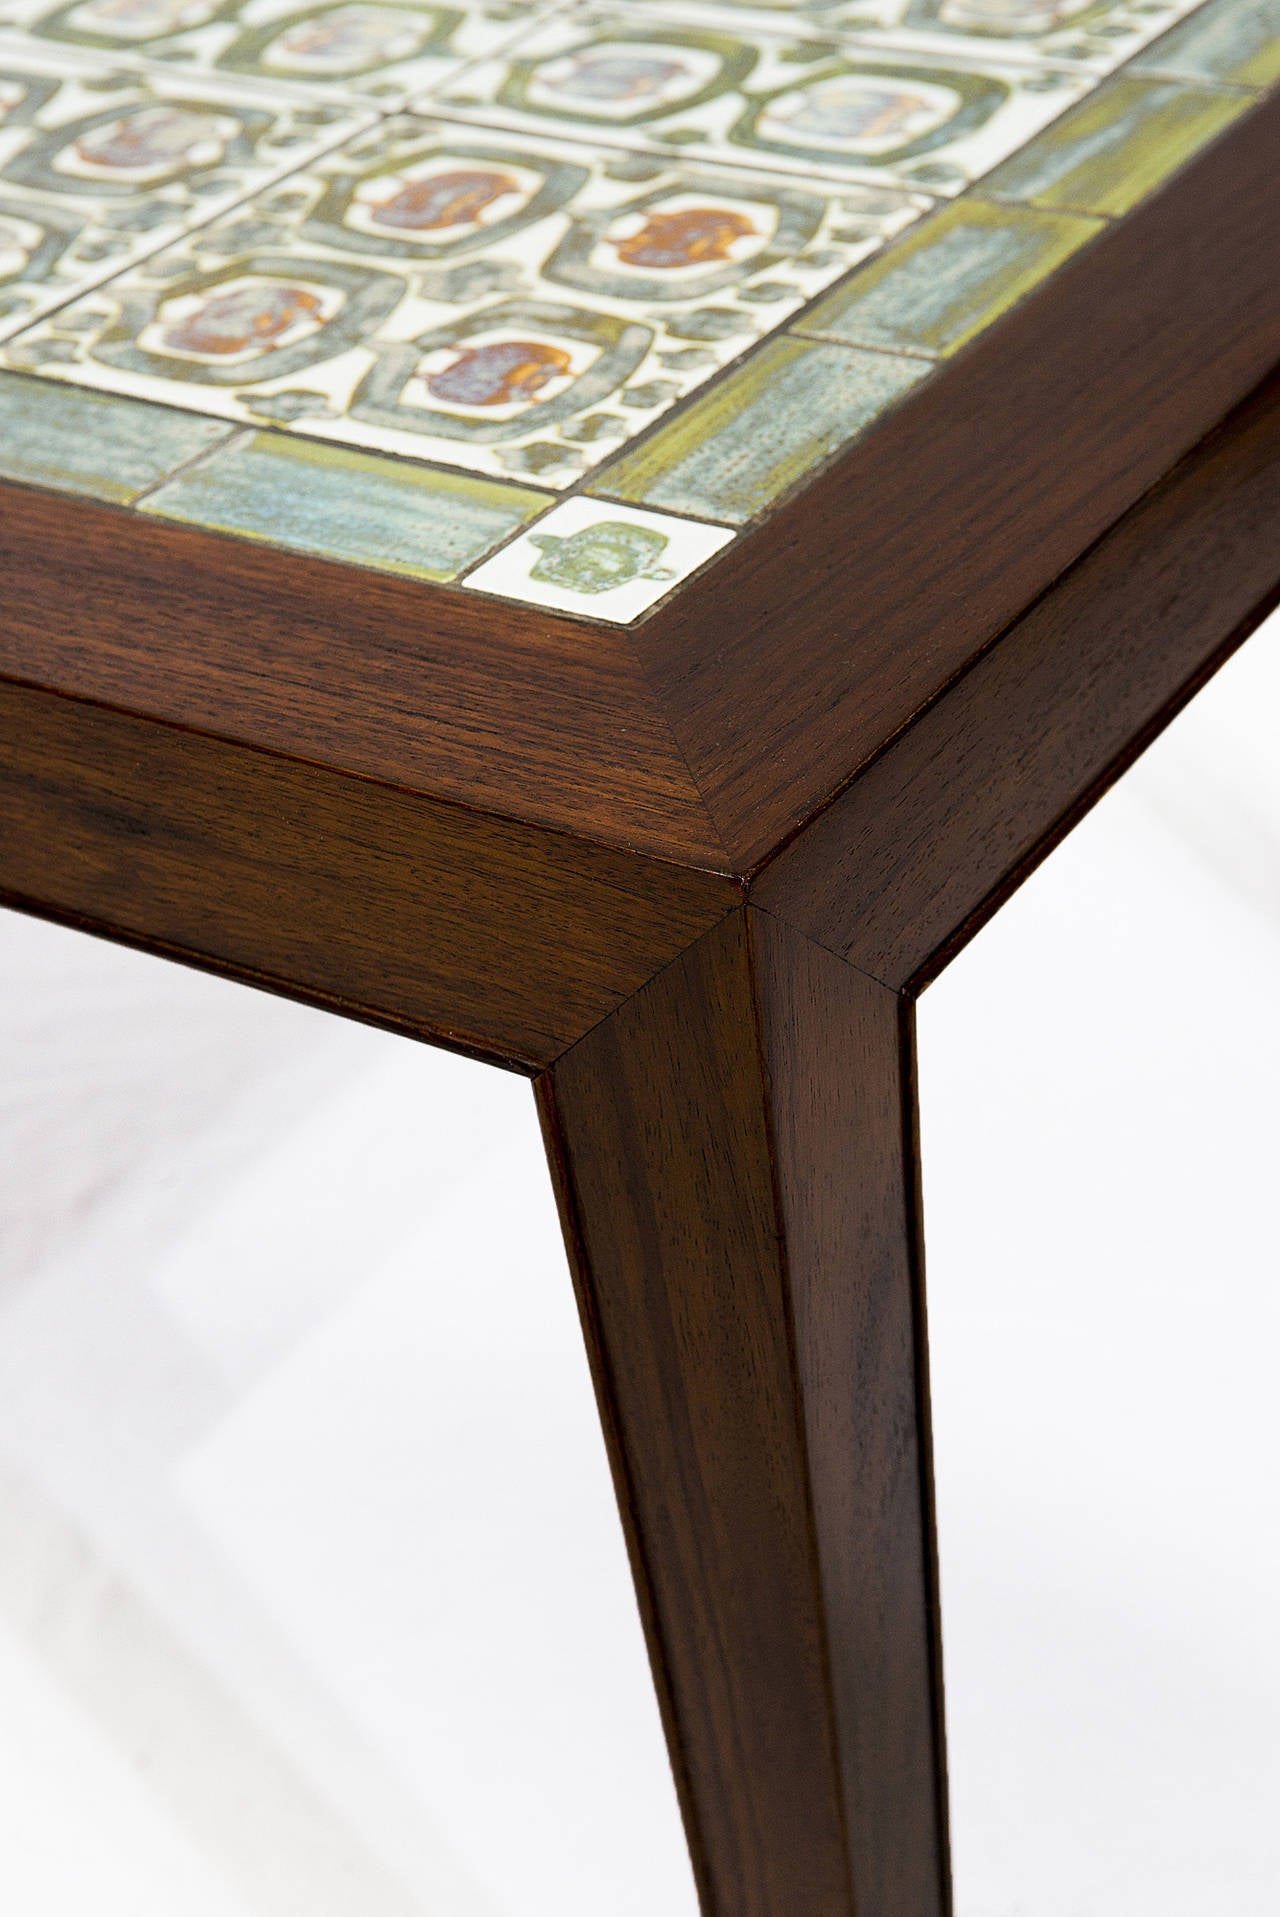 Scandinavian Modern Rosewood Coffee Table with Royal Copenhagen Tiles